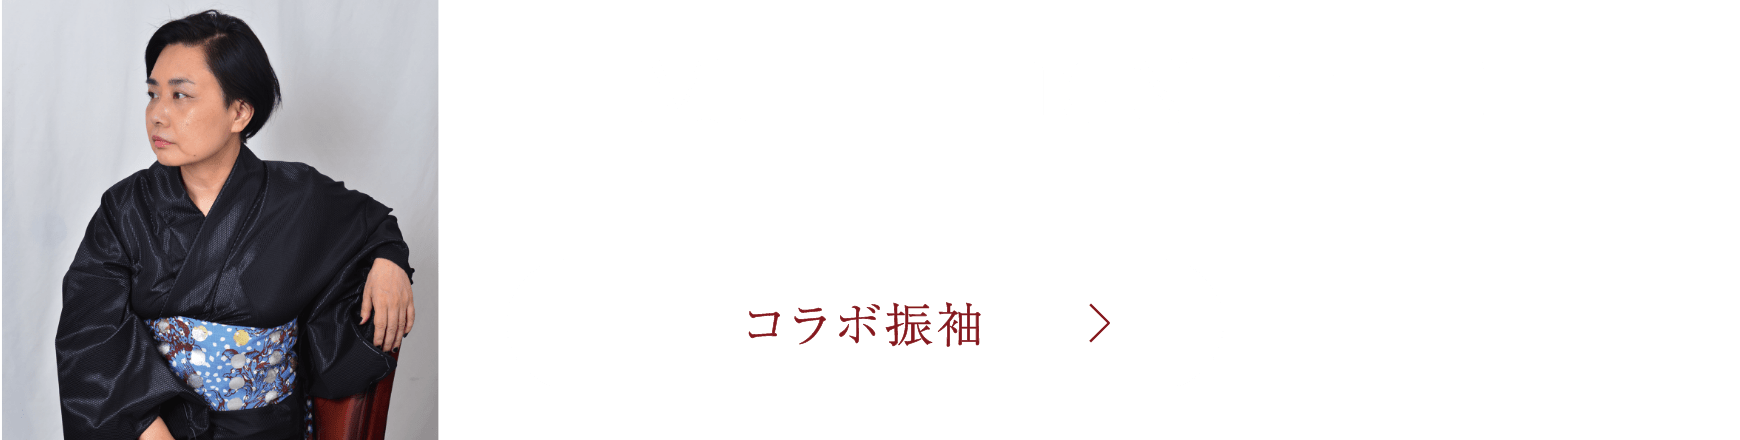 RUMIX DESIGN STUDIO 芝崎 るみ コラボ振袖